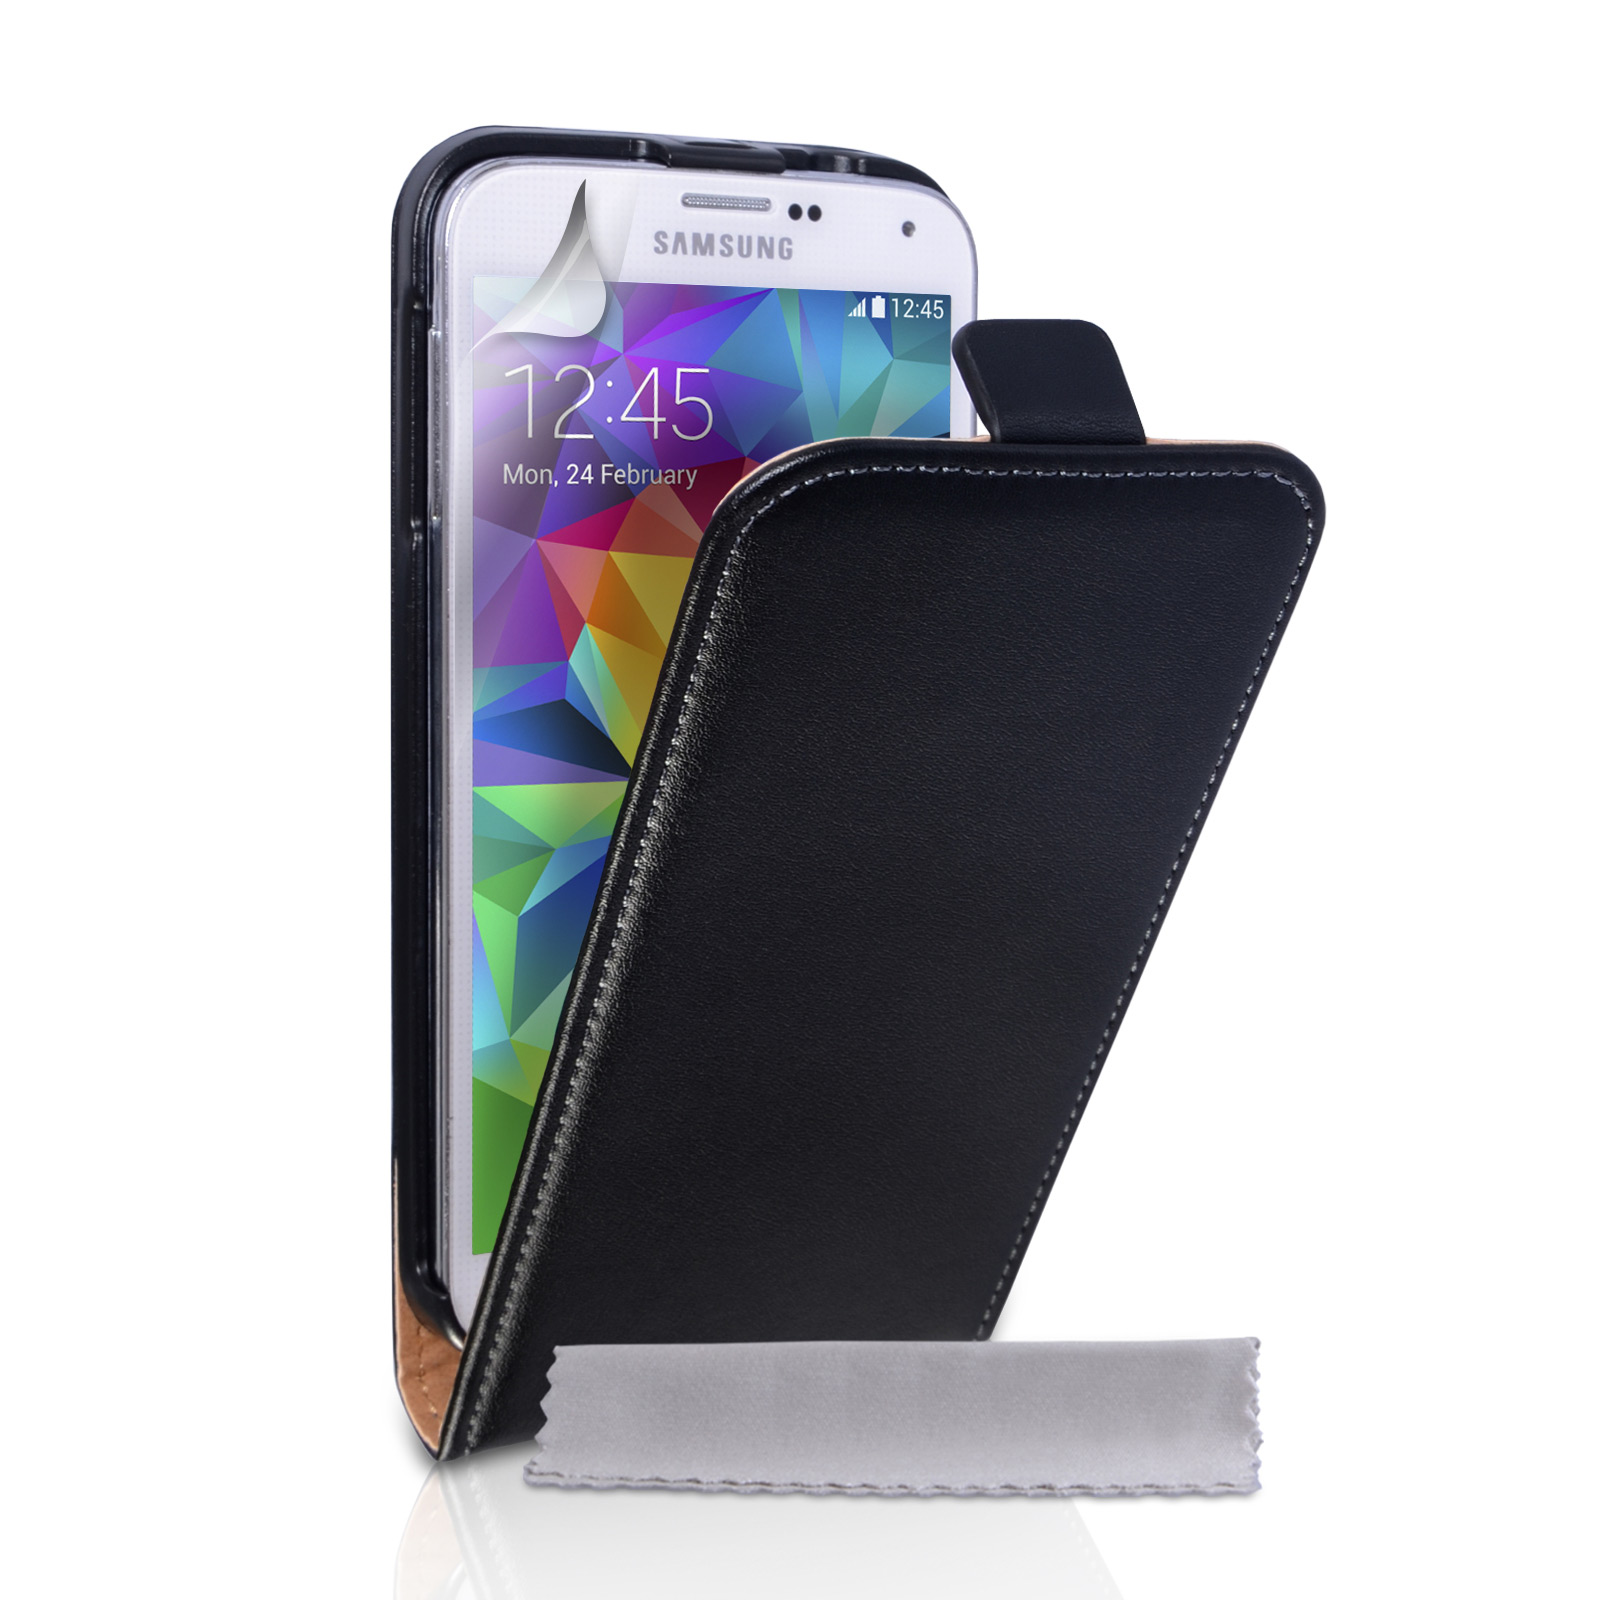 Caseflex Samsung Galaxy S5 Real Leather Flip Case - Black